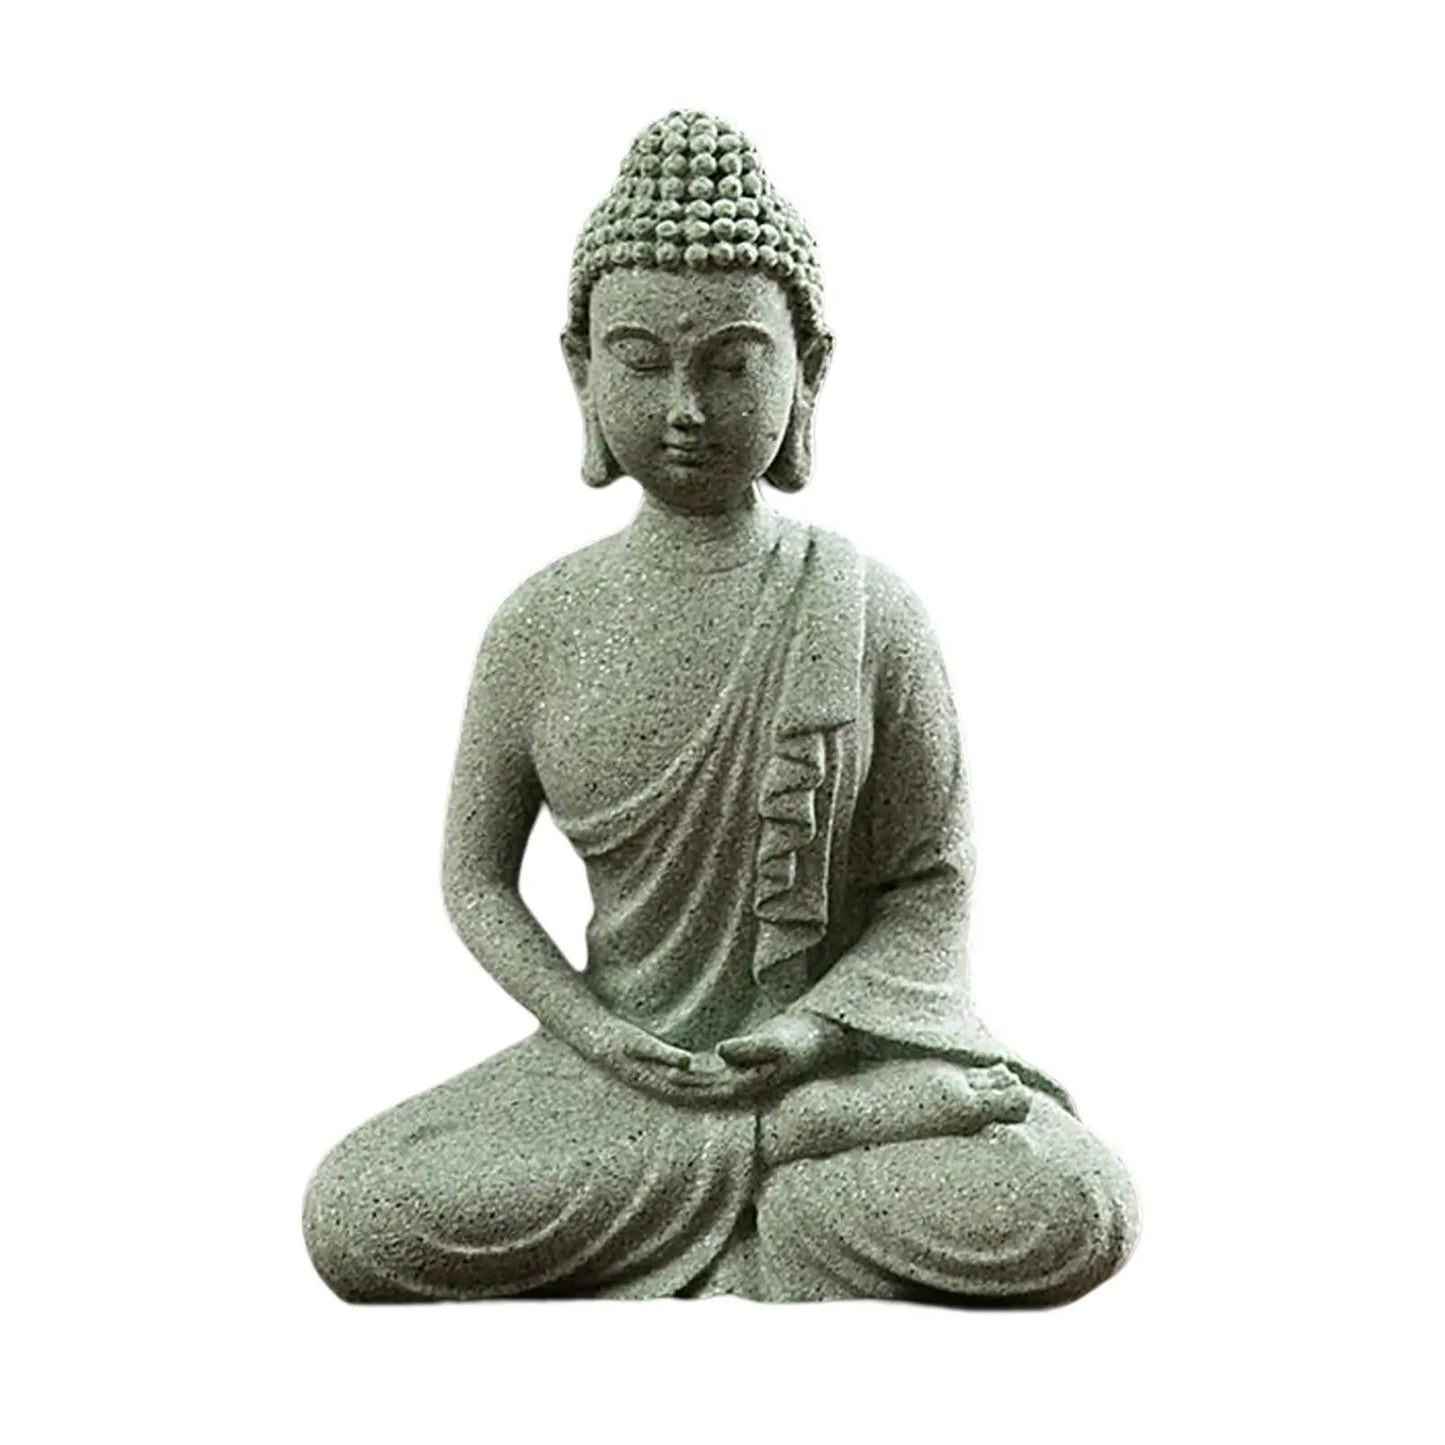 Petite statue de bouddha ornement Figurines de Yoga rustique Oriental décoratif pour méditation bureau bureau intérieur